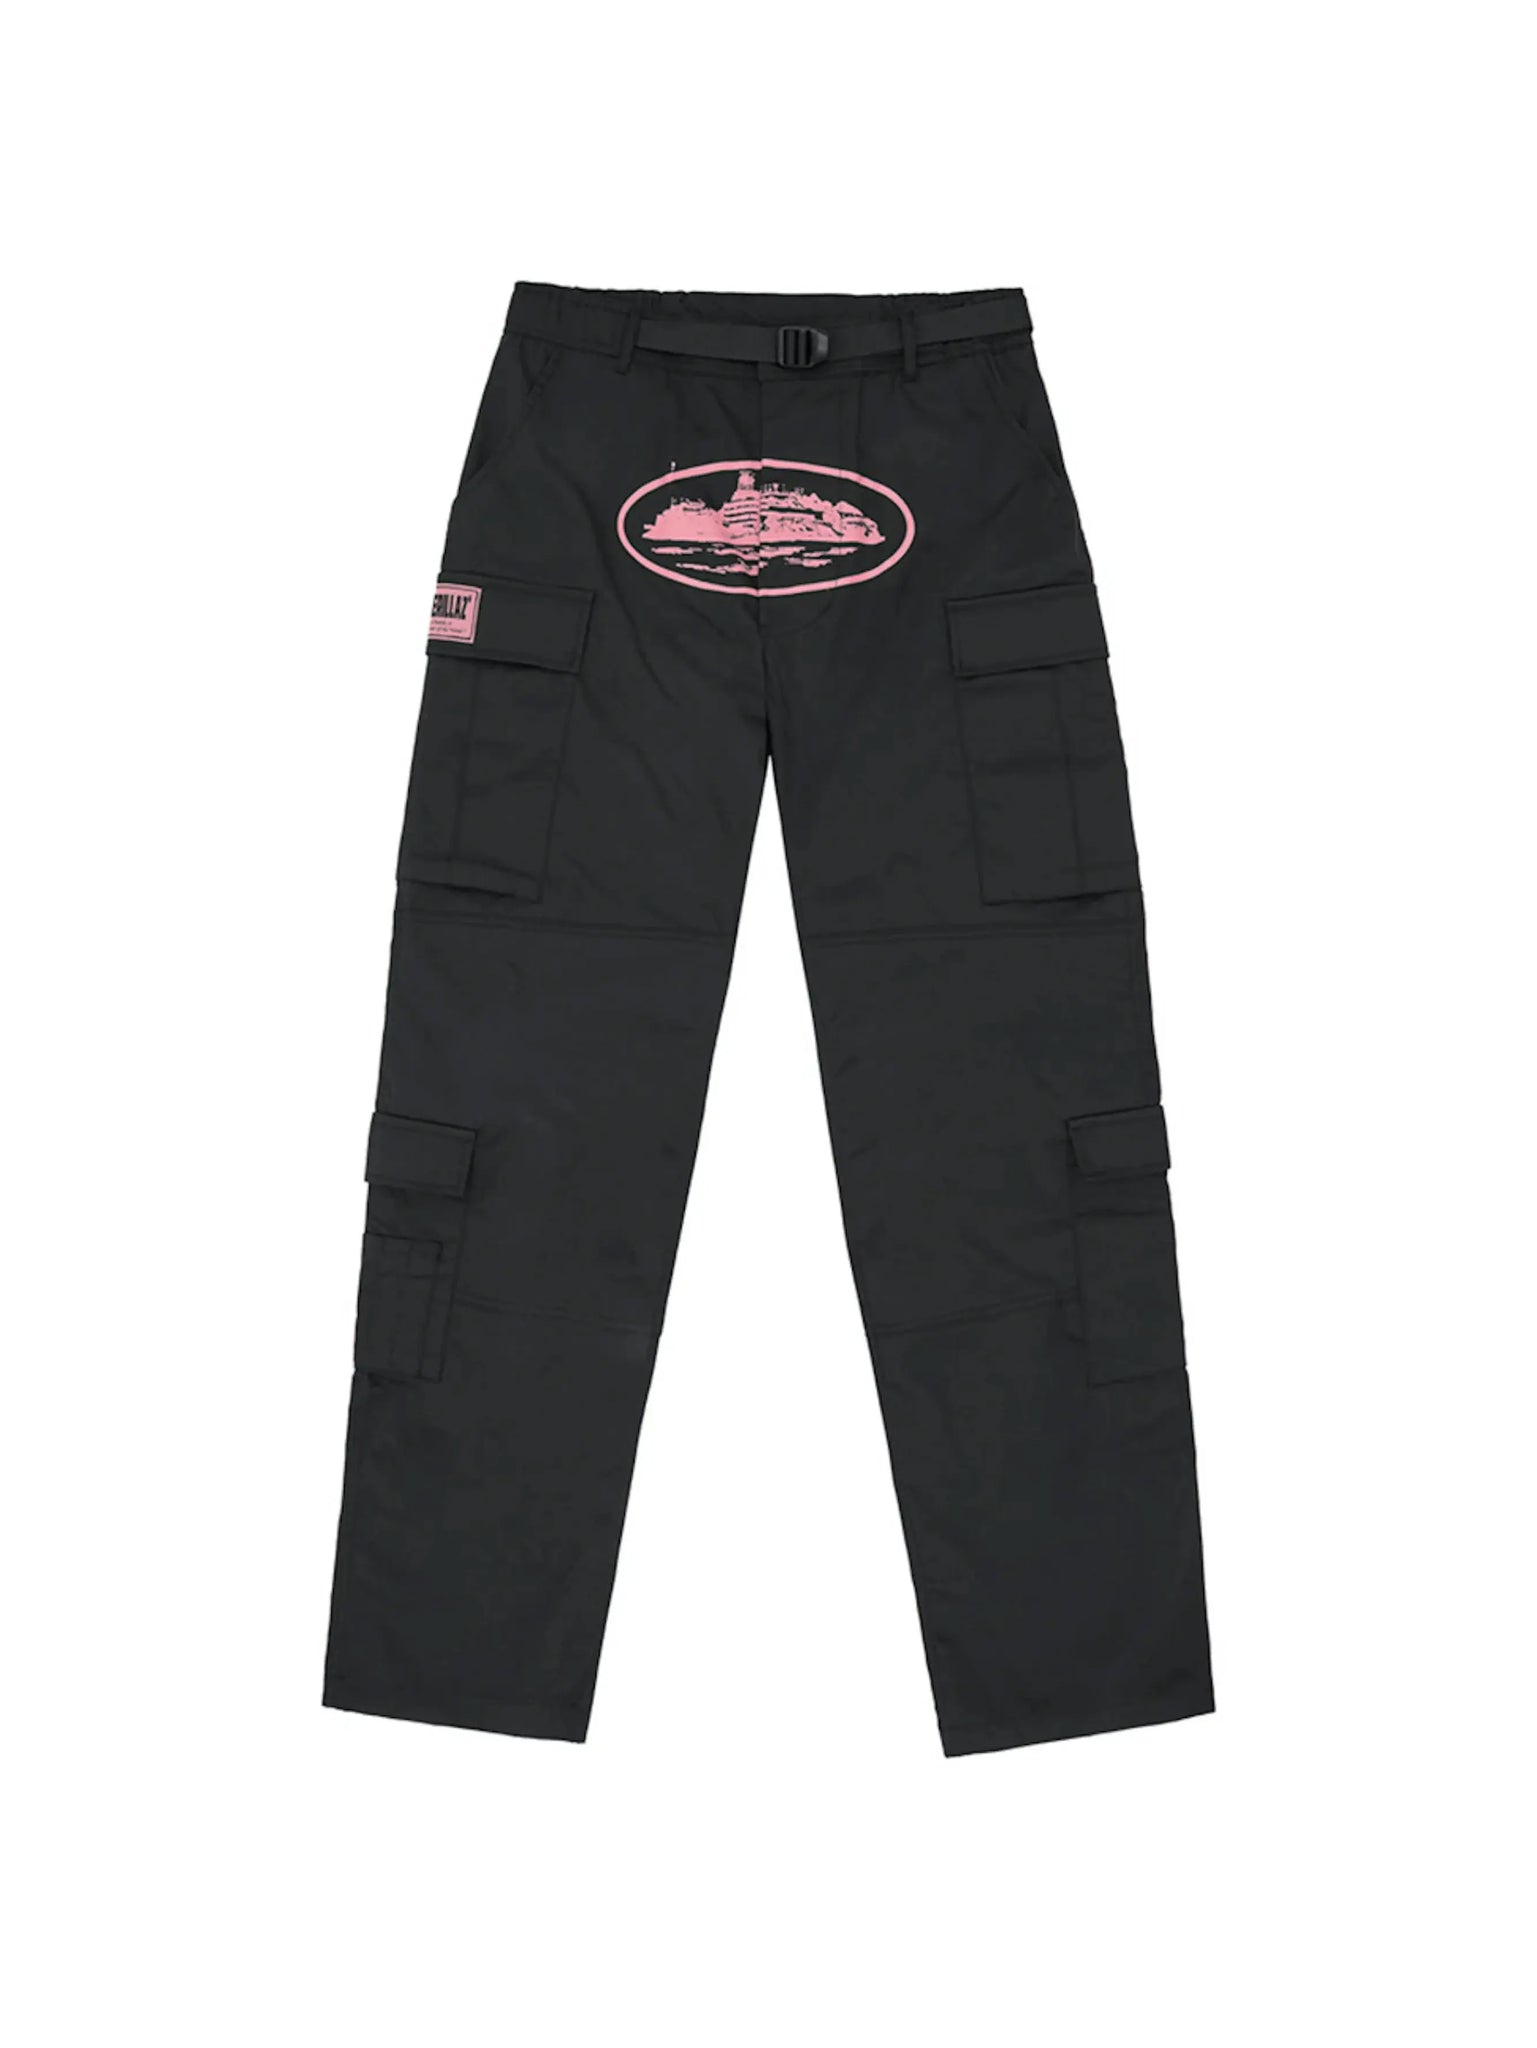 Corteiz Guerillaz Cargo Pant Black/Pink in Melbourne, Australia - Prior